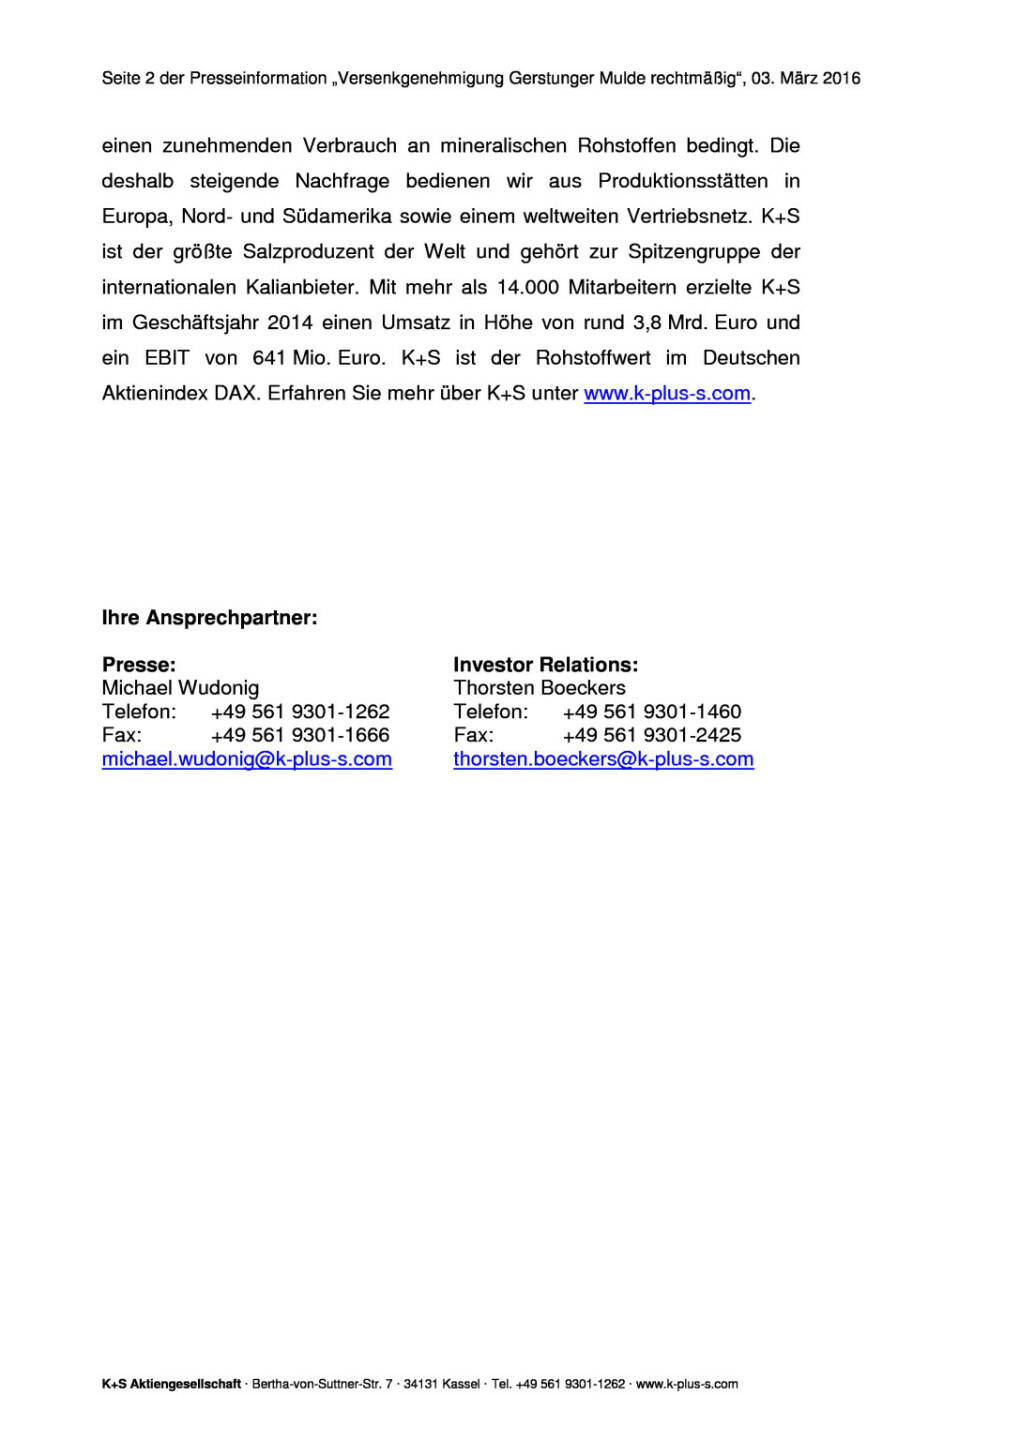 K+S AG: Versenkgenehmigung Gerstunger Mulde rechtmäßig, Seite 2/2, komplettes Dokument unter http://boerse-social.com/static/uploads/file_721_ks_ag_versenkgenehmigung_gerstunger_mulde_rechtmassig.pdf